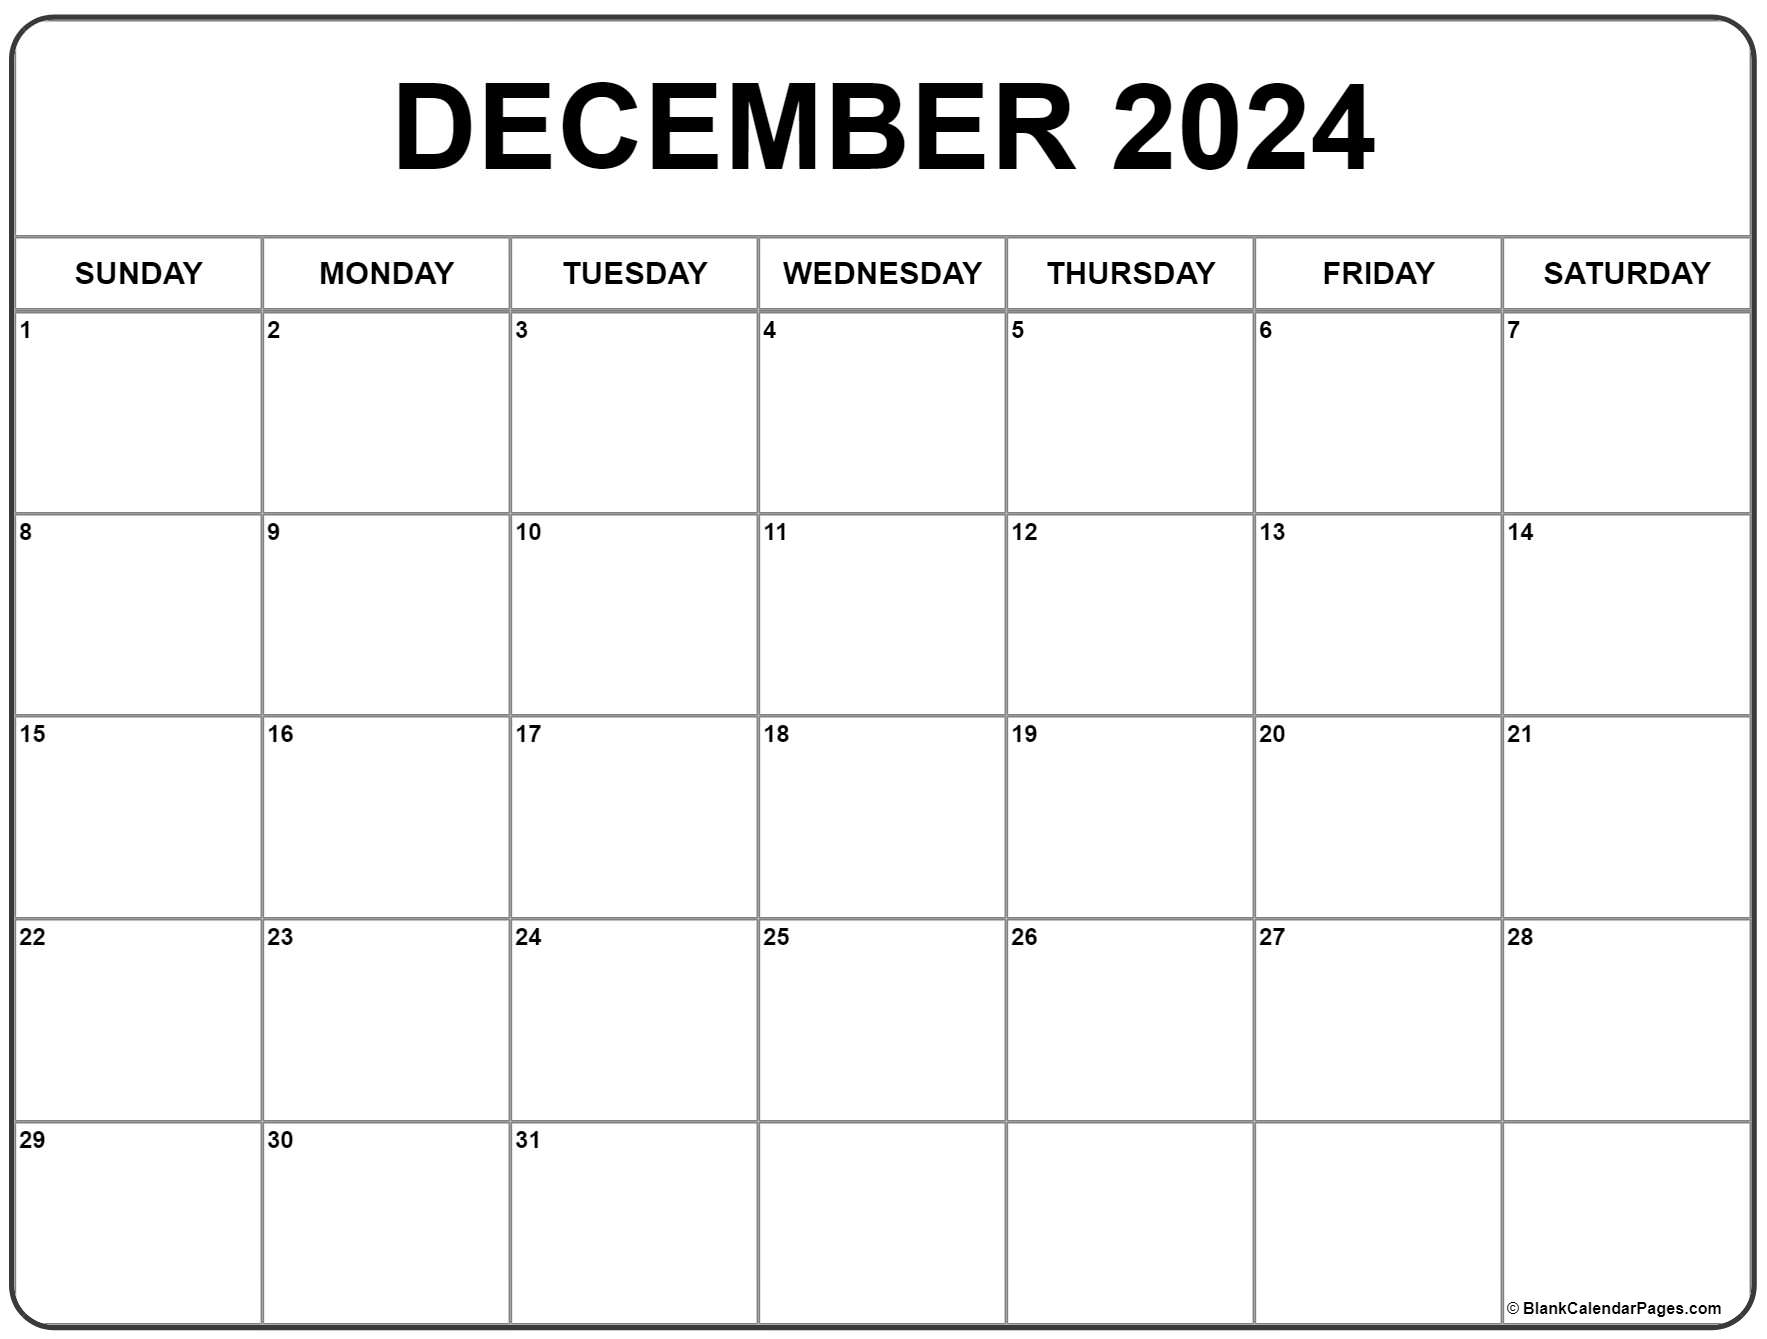 December 2024 Calendar | Free Printable Calendar for Printable Monthly Calendar December 2024